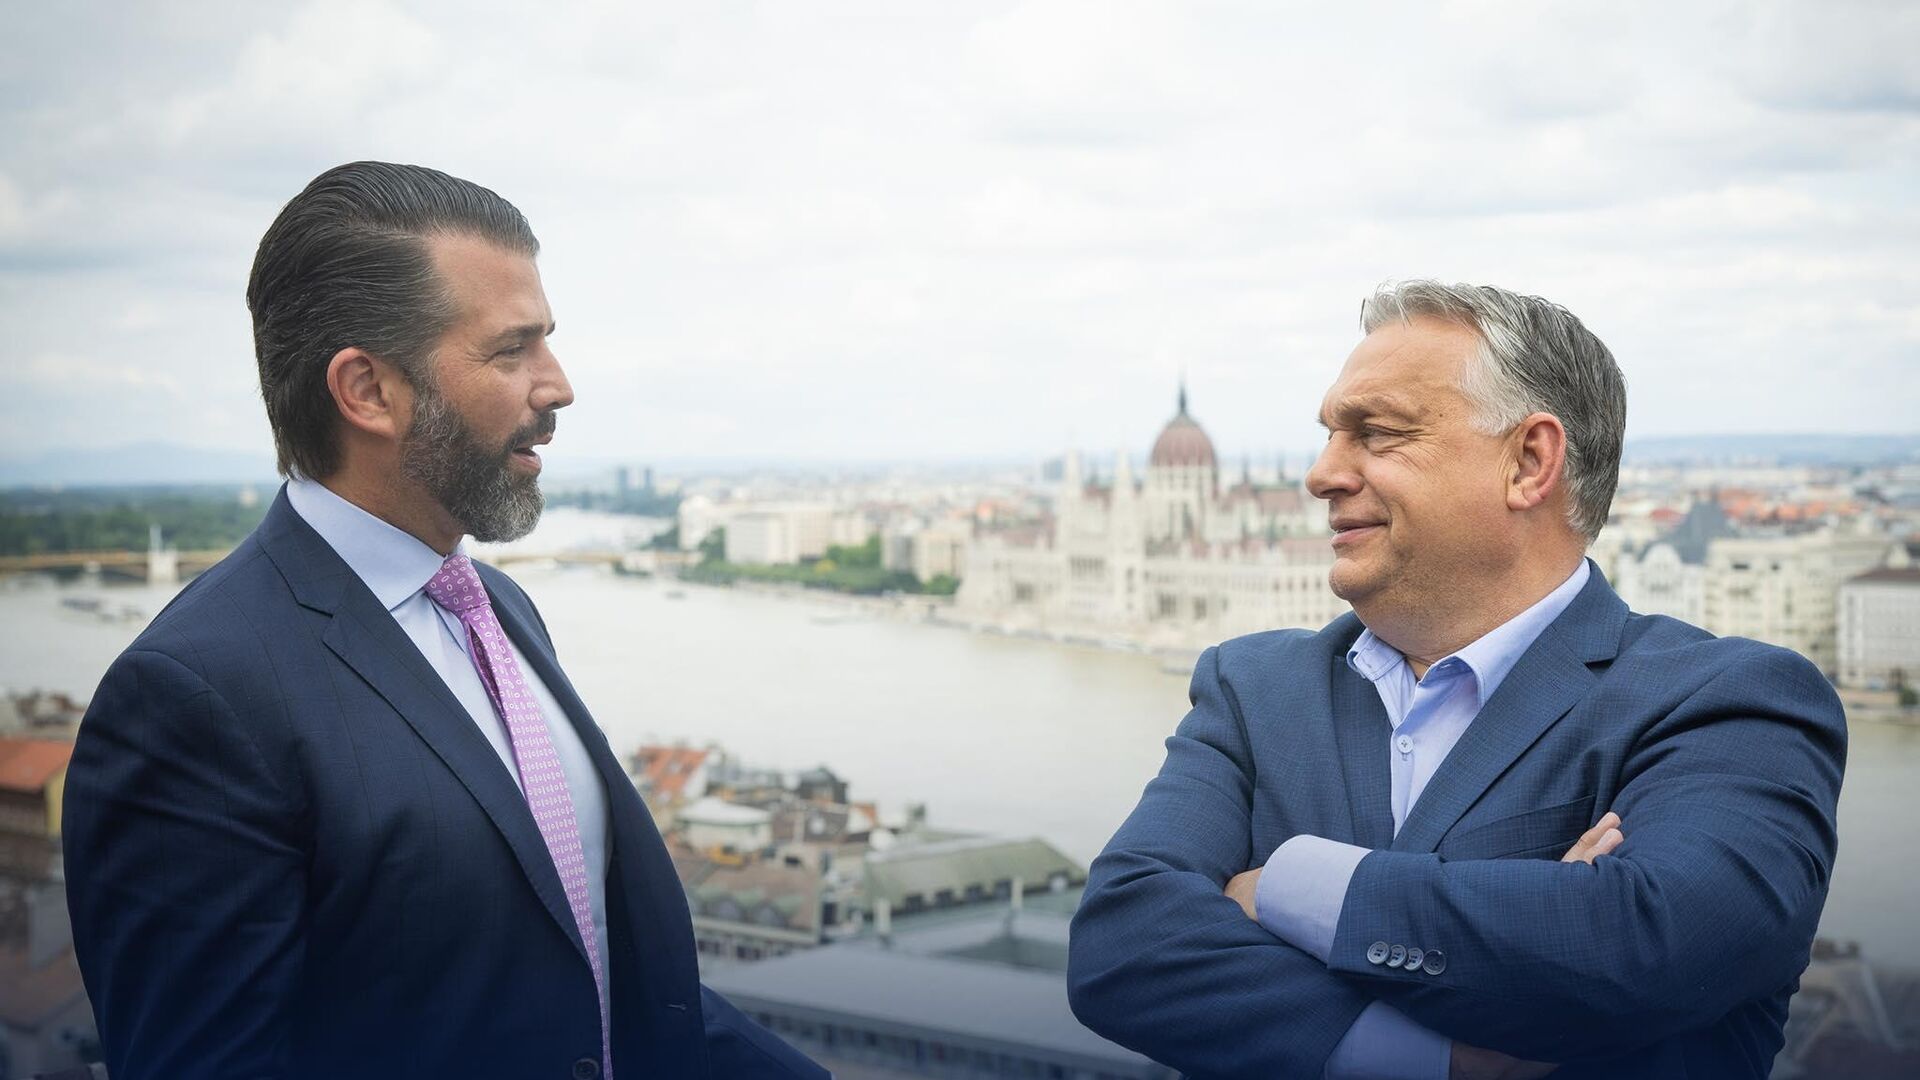 Дональд Трамп-младший и Виктор Орбан во время встречи в Будапеште. 13 июня 2024 - РИА Новости, 1920, 13.06.2024